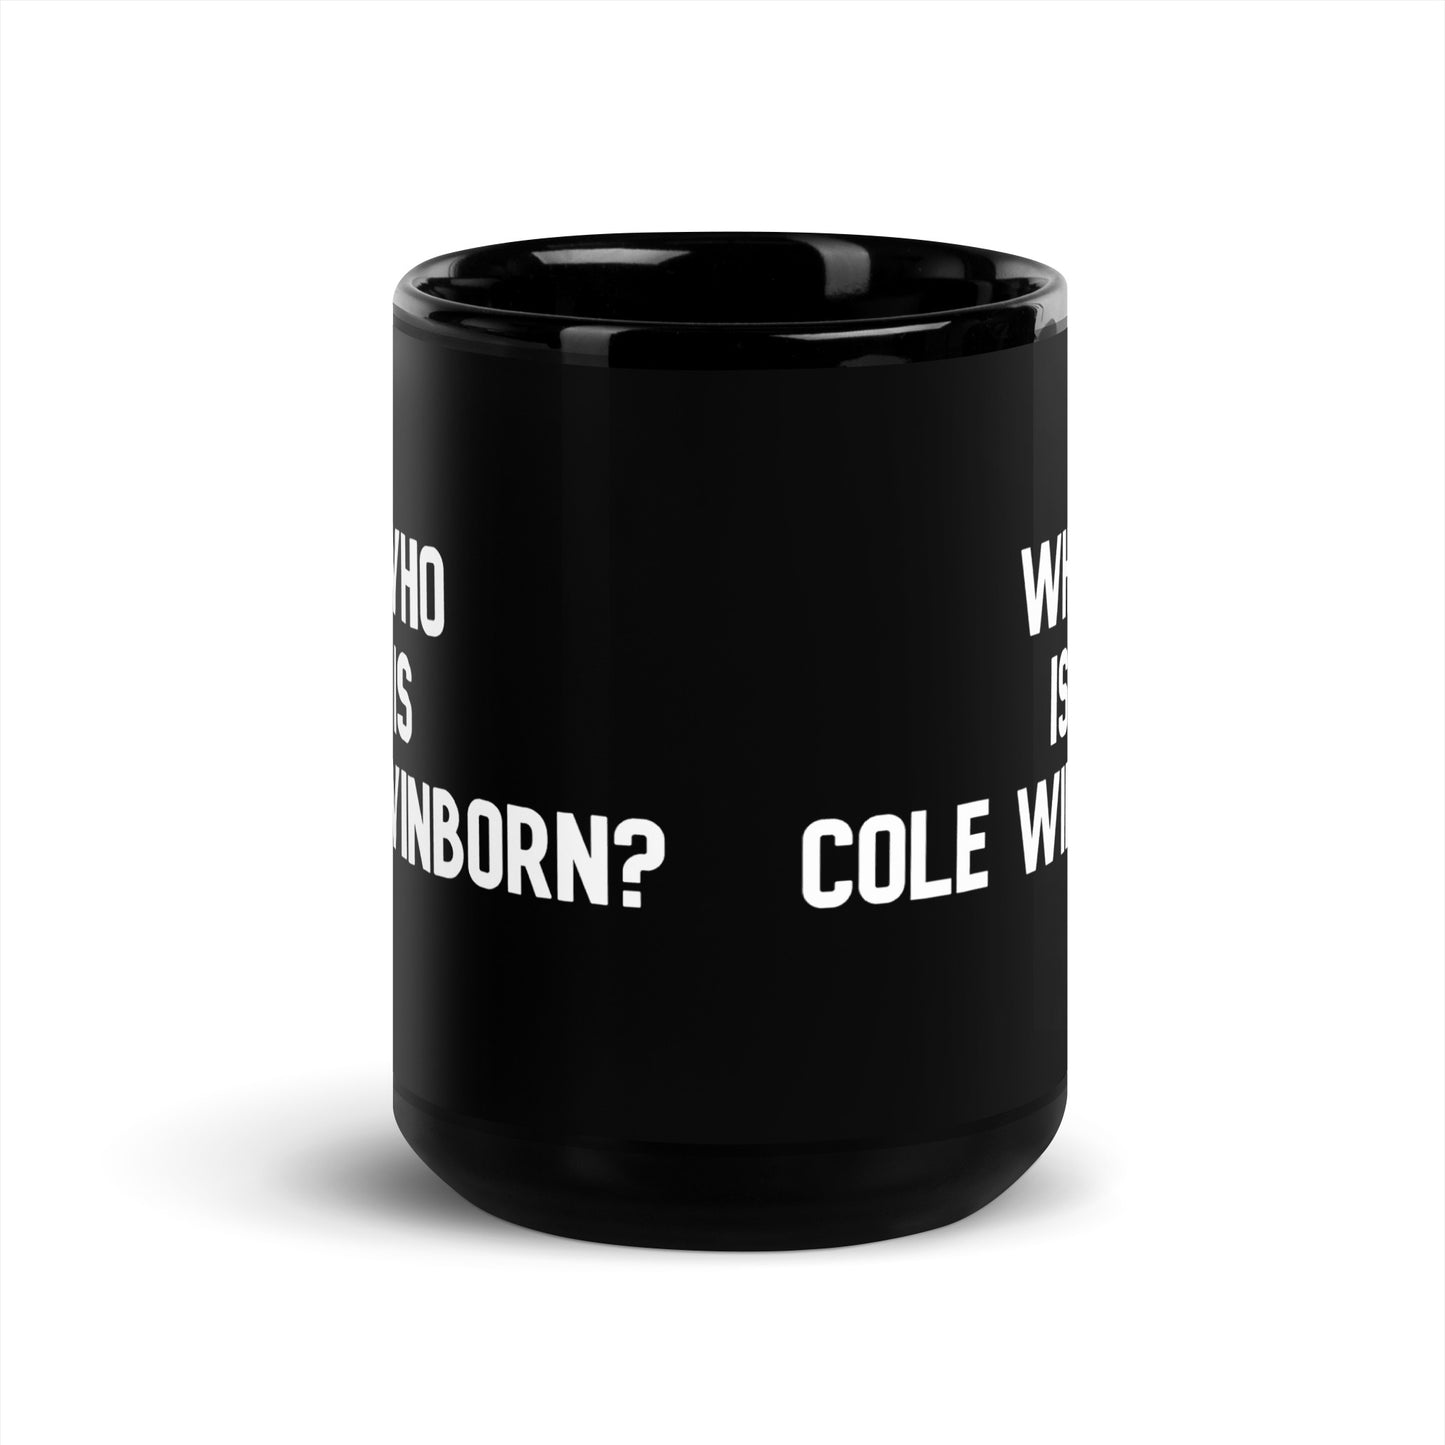 Who is Cole WInborn? Mug